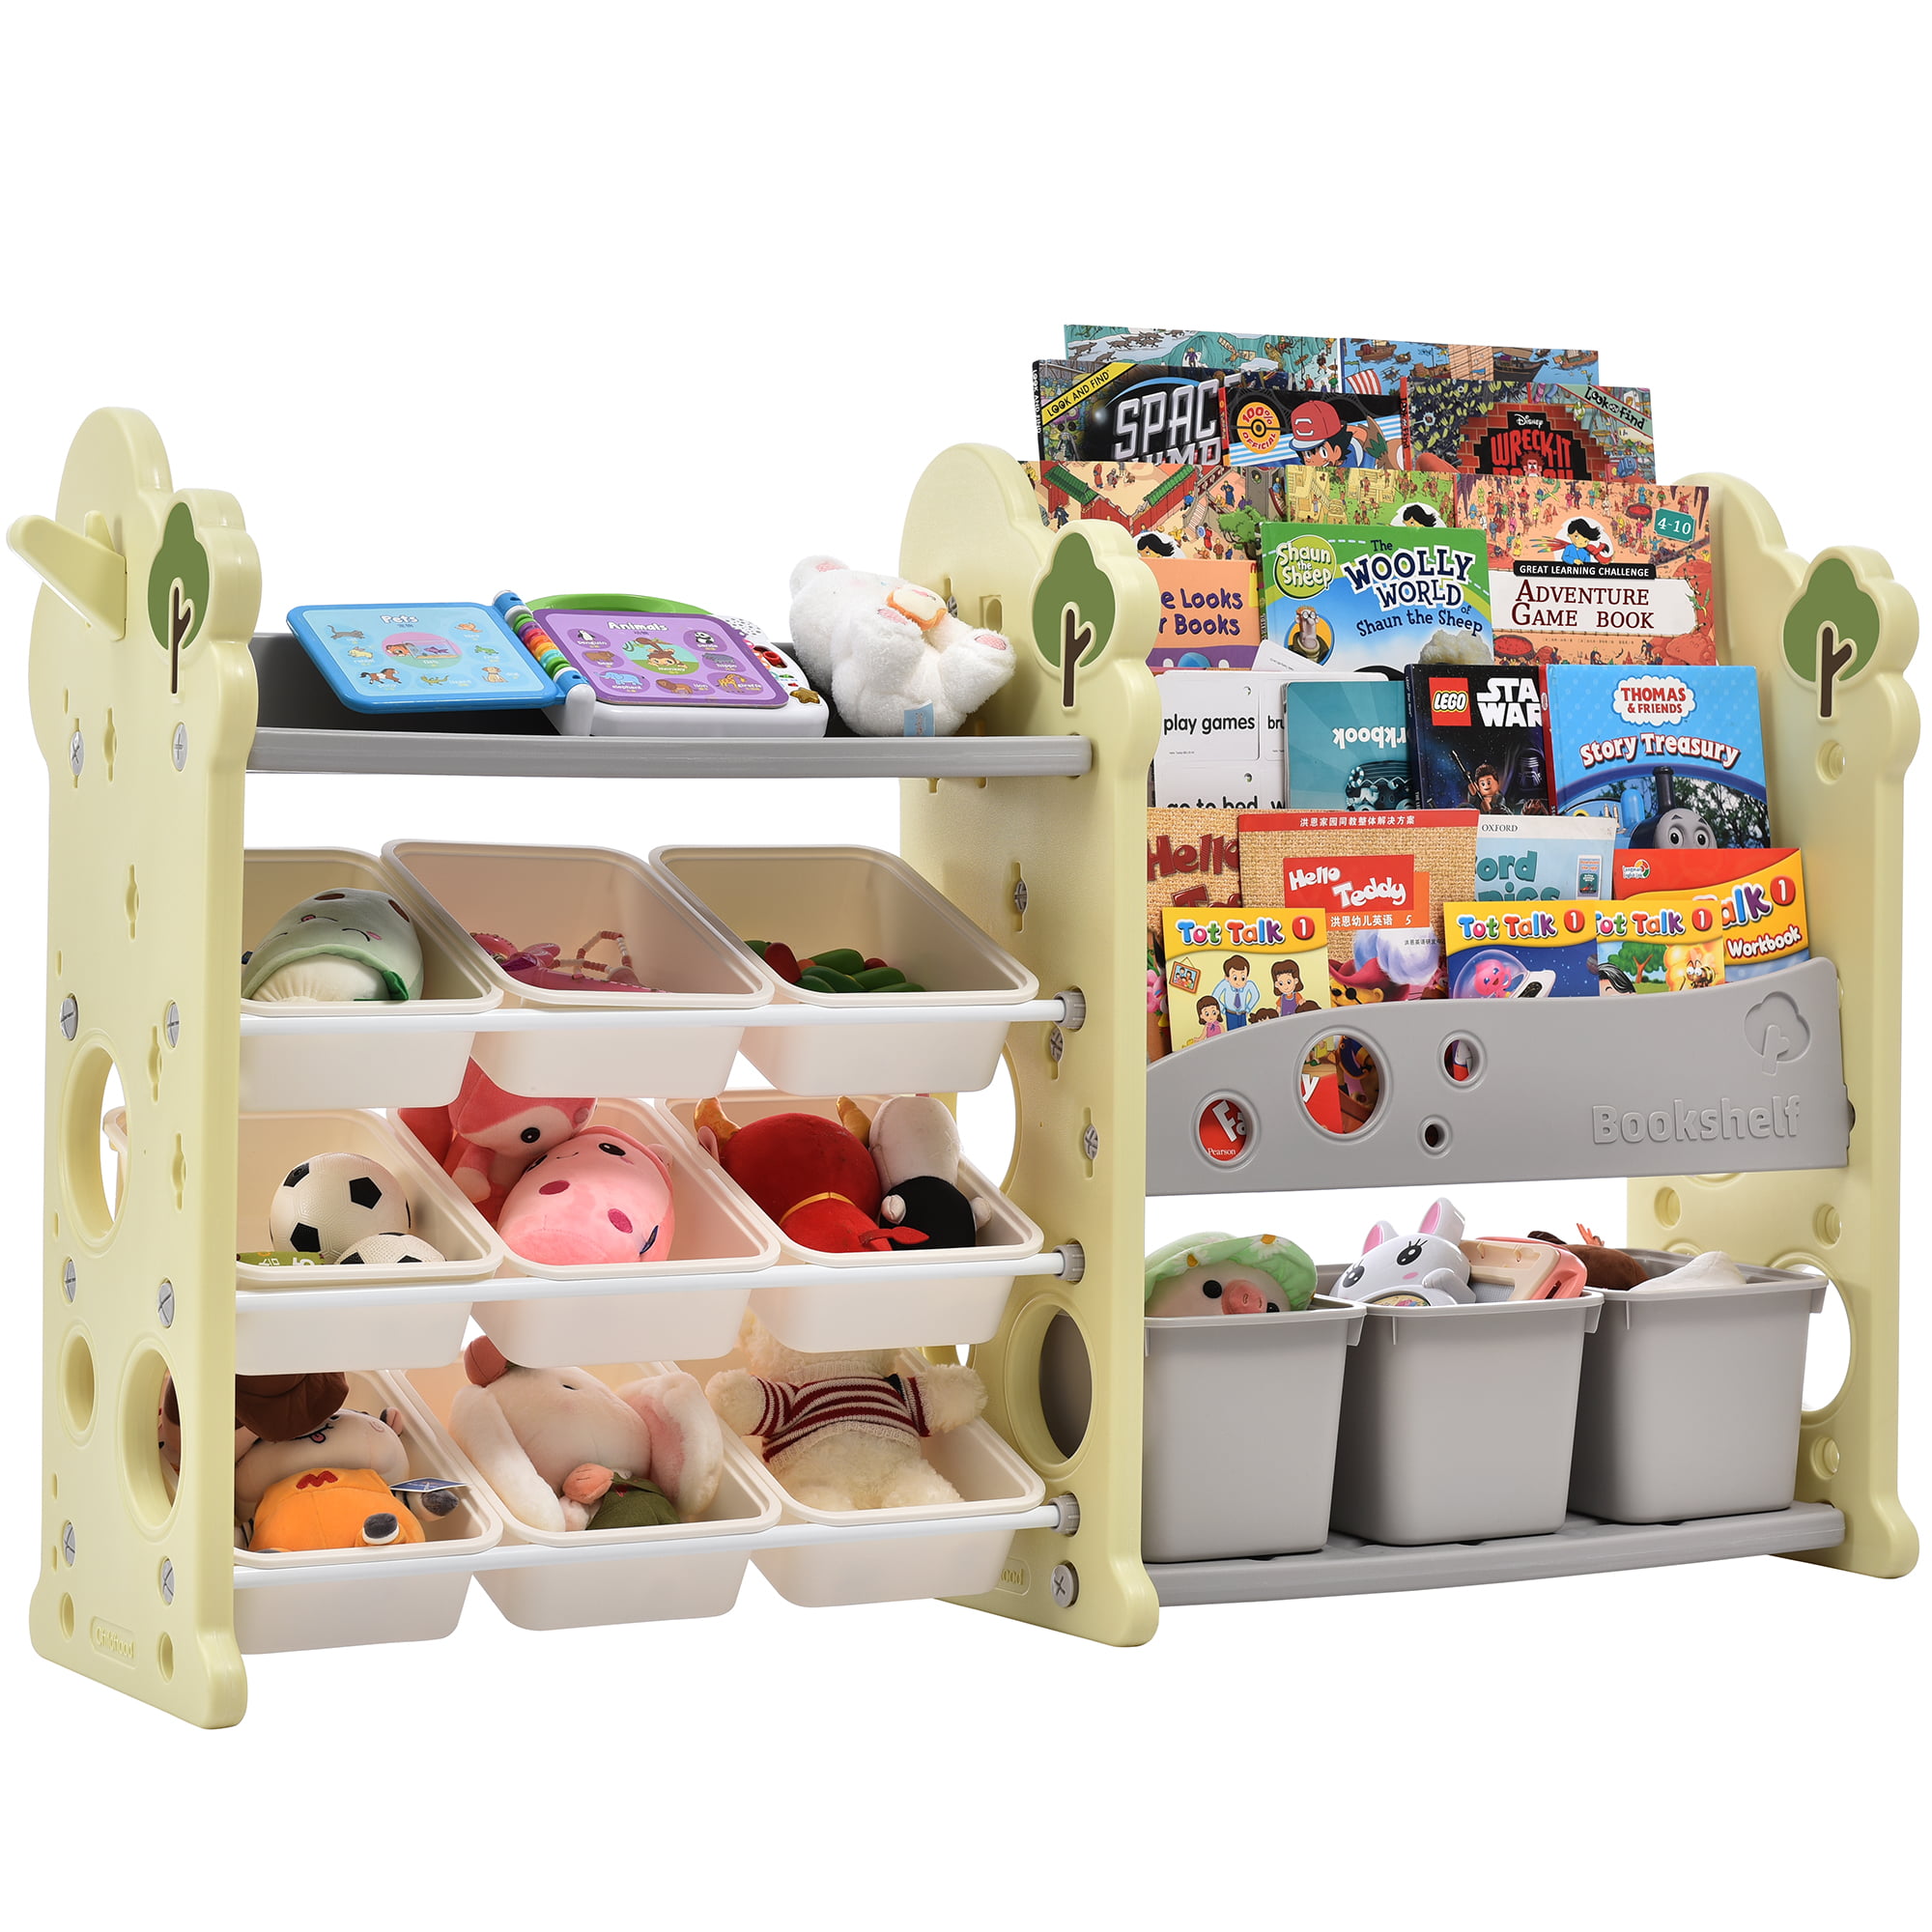 Toy Storage Organizer with 12 Bins and 4 Bookshelves